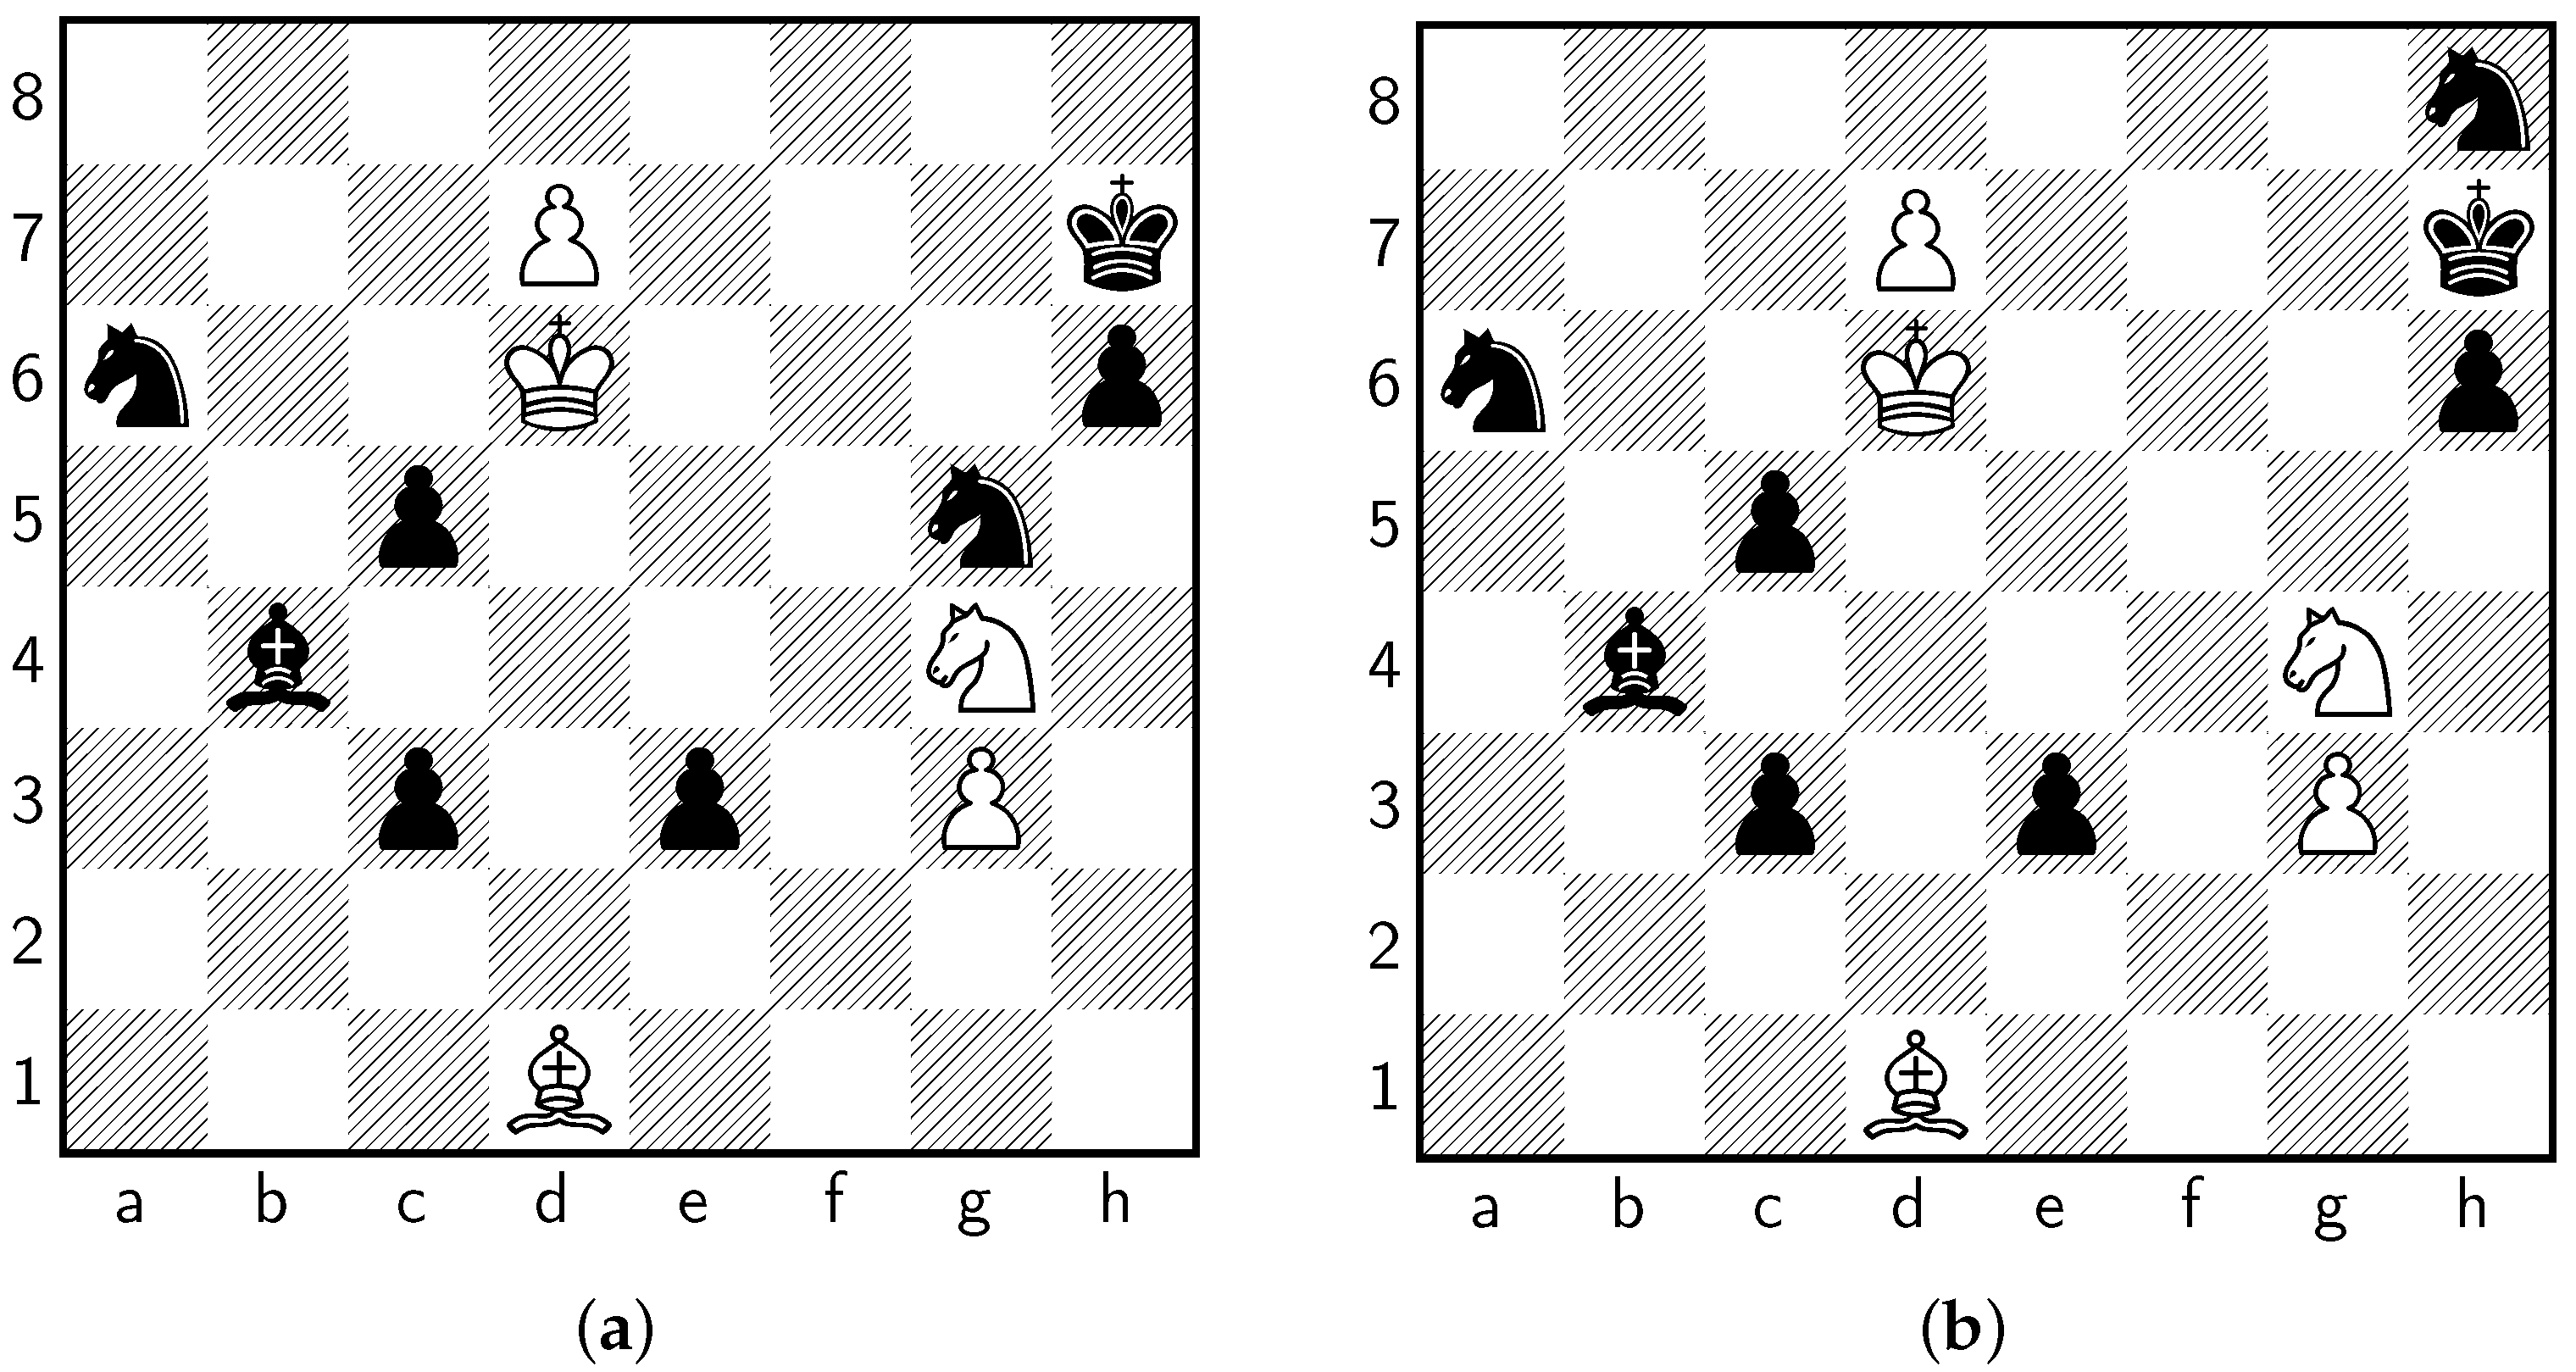 Win-Draw-Loss evaluation - Leela Chess Zero